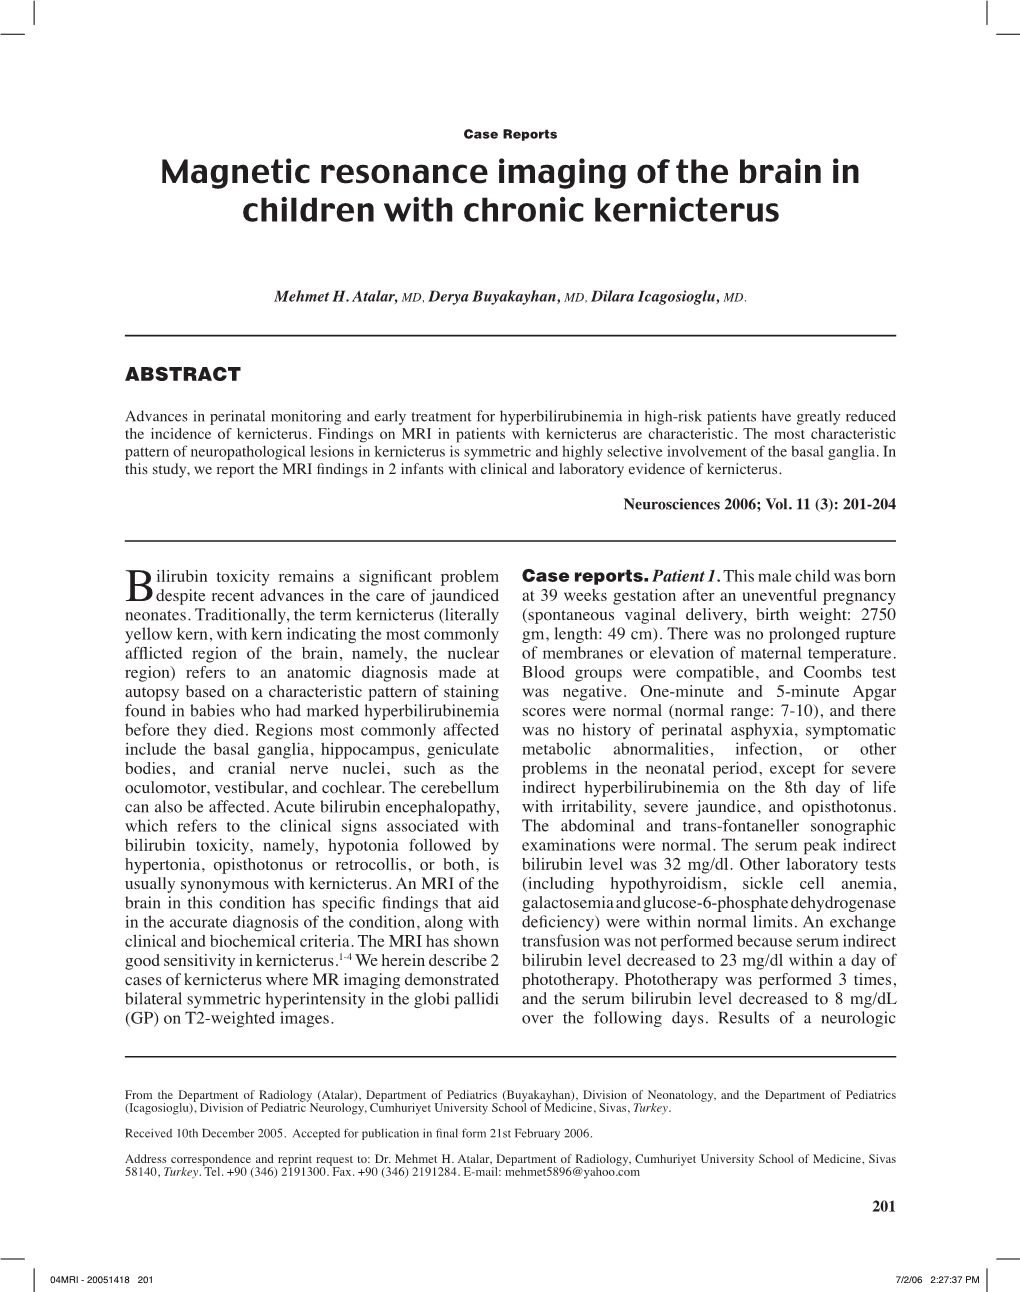 Magnetic Resonance Imaging of the Brain in Children with Chronic Kernicterus